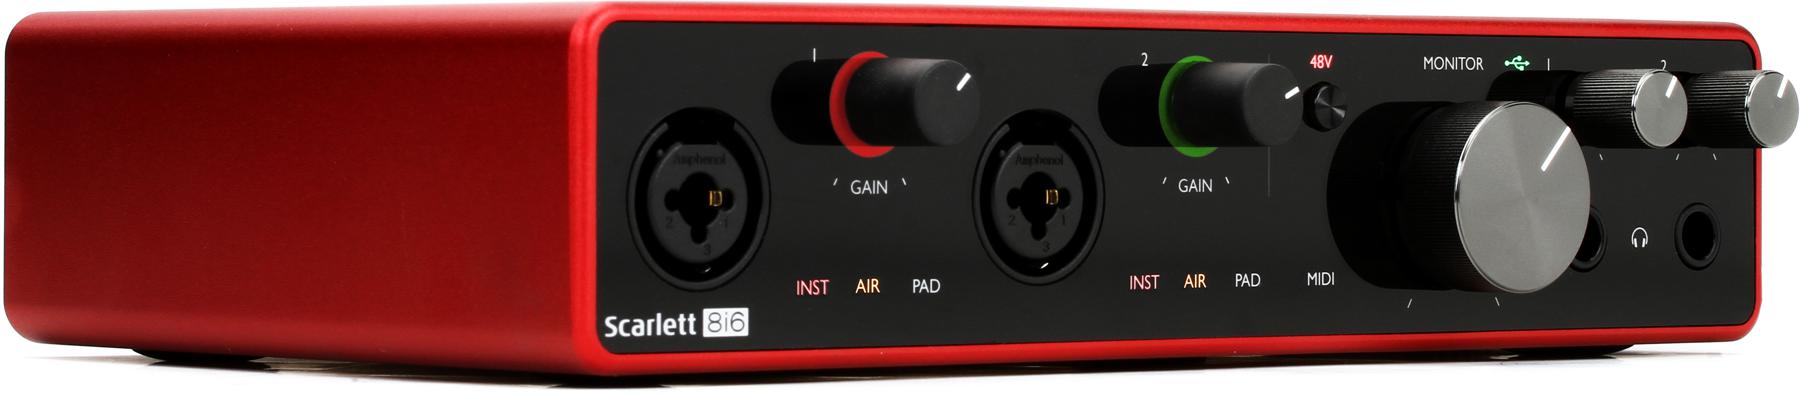 Focusrite Scarlett 8i6 3rd Gen USB Audio Interface-image